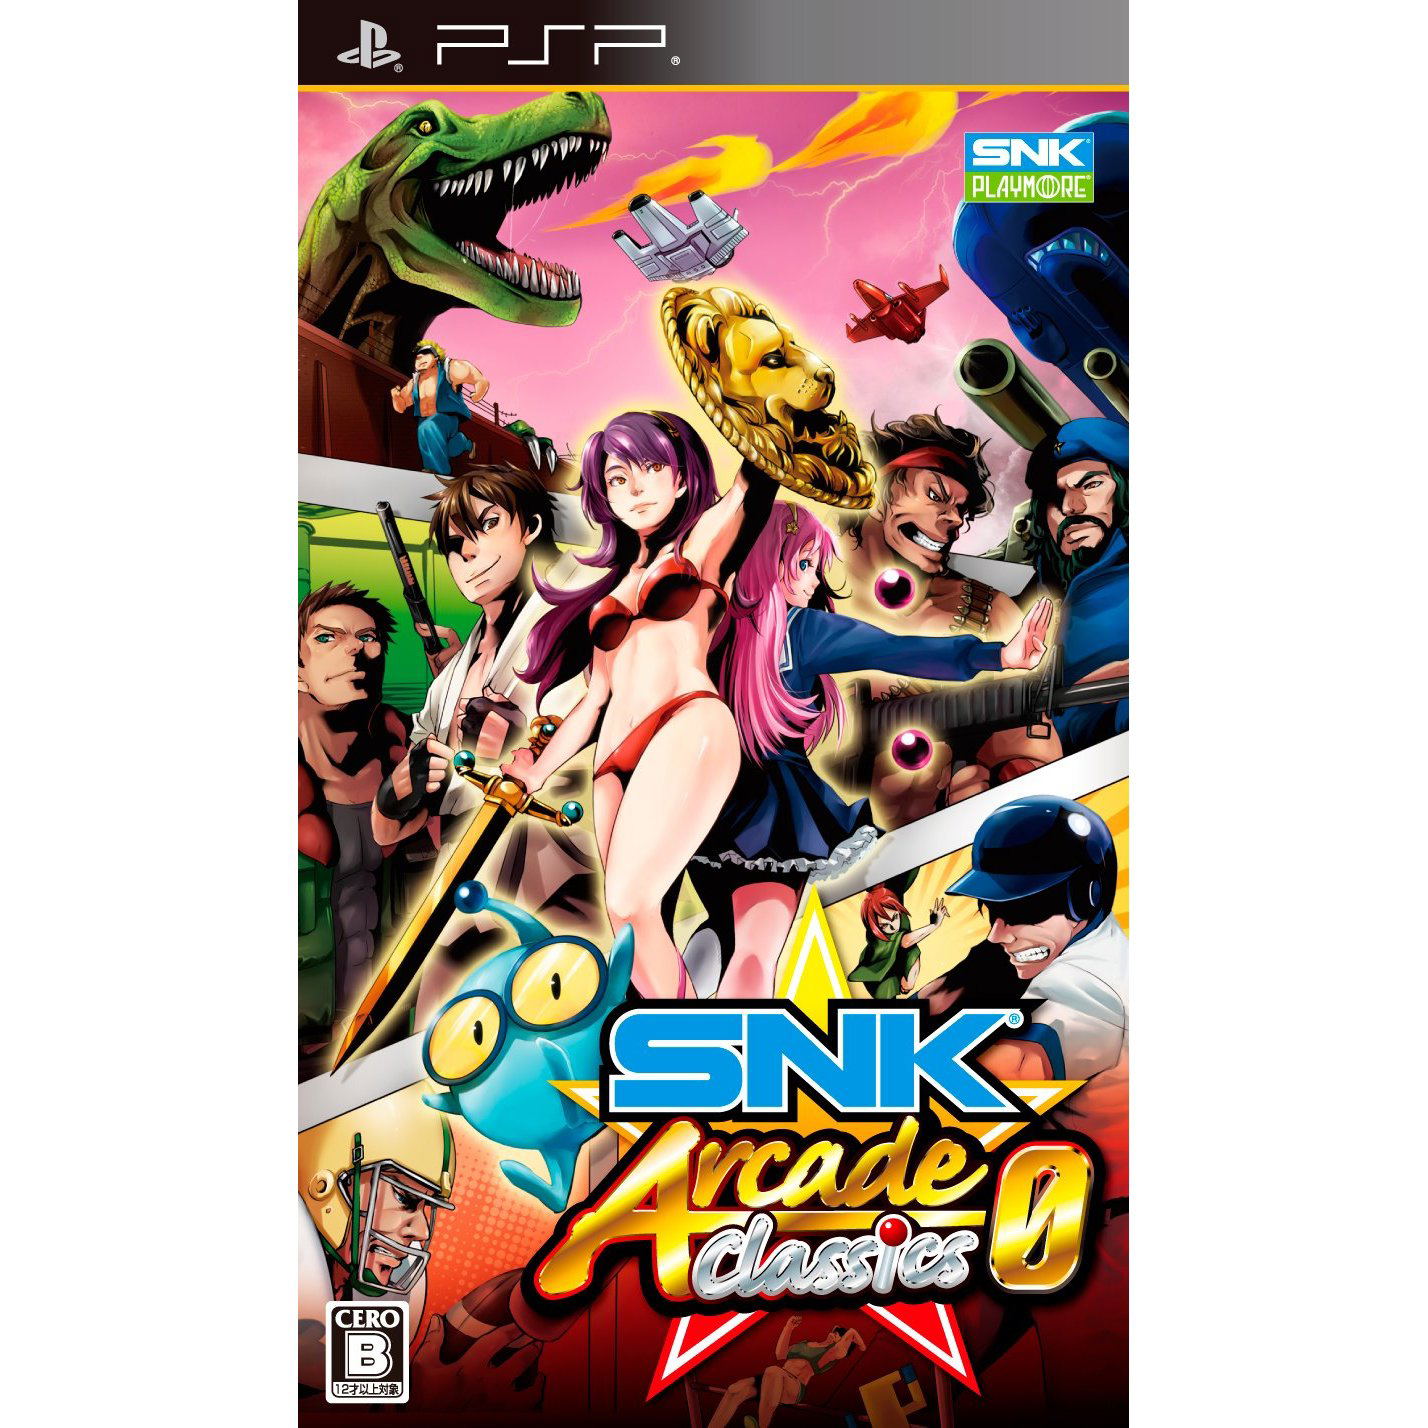 SNK Arcade Classics 0 for Sony PSP